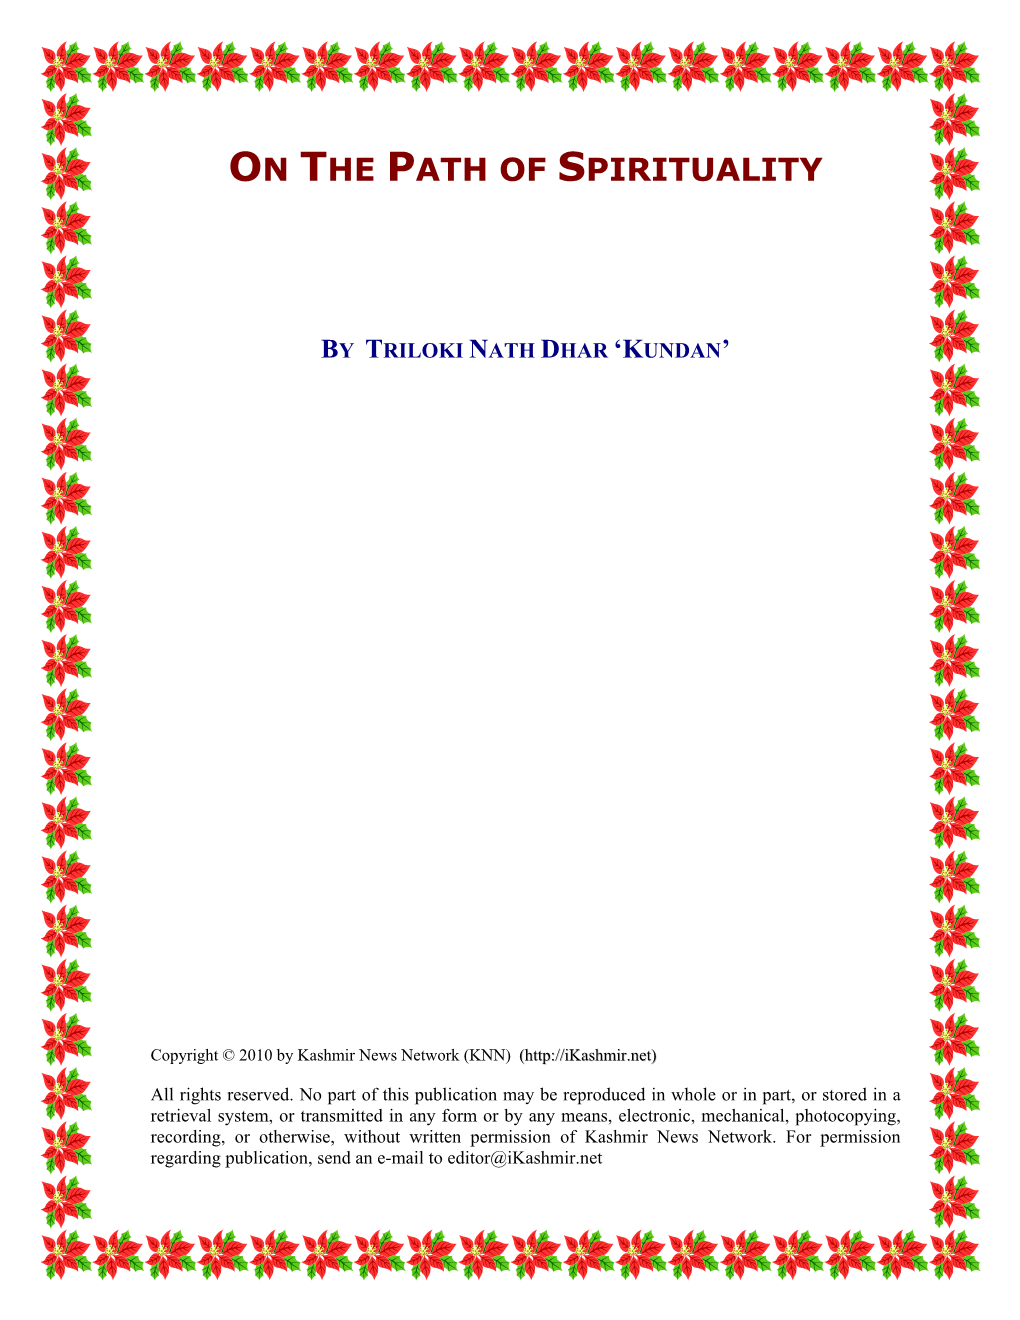 On the Path of Spirituality